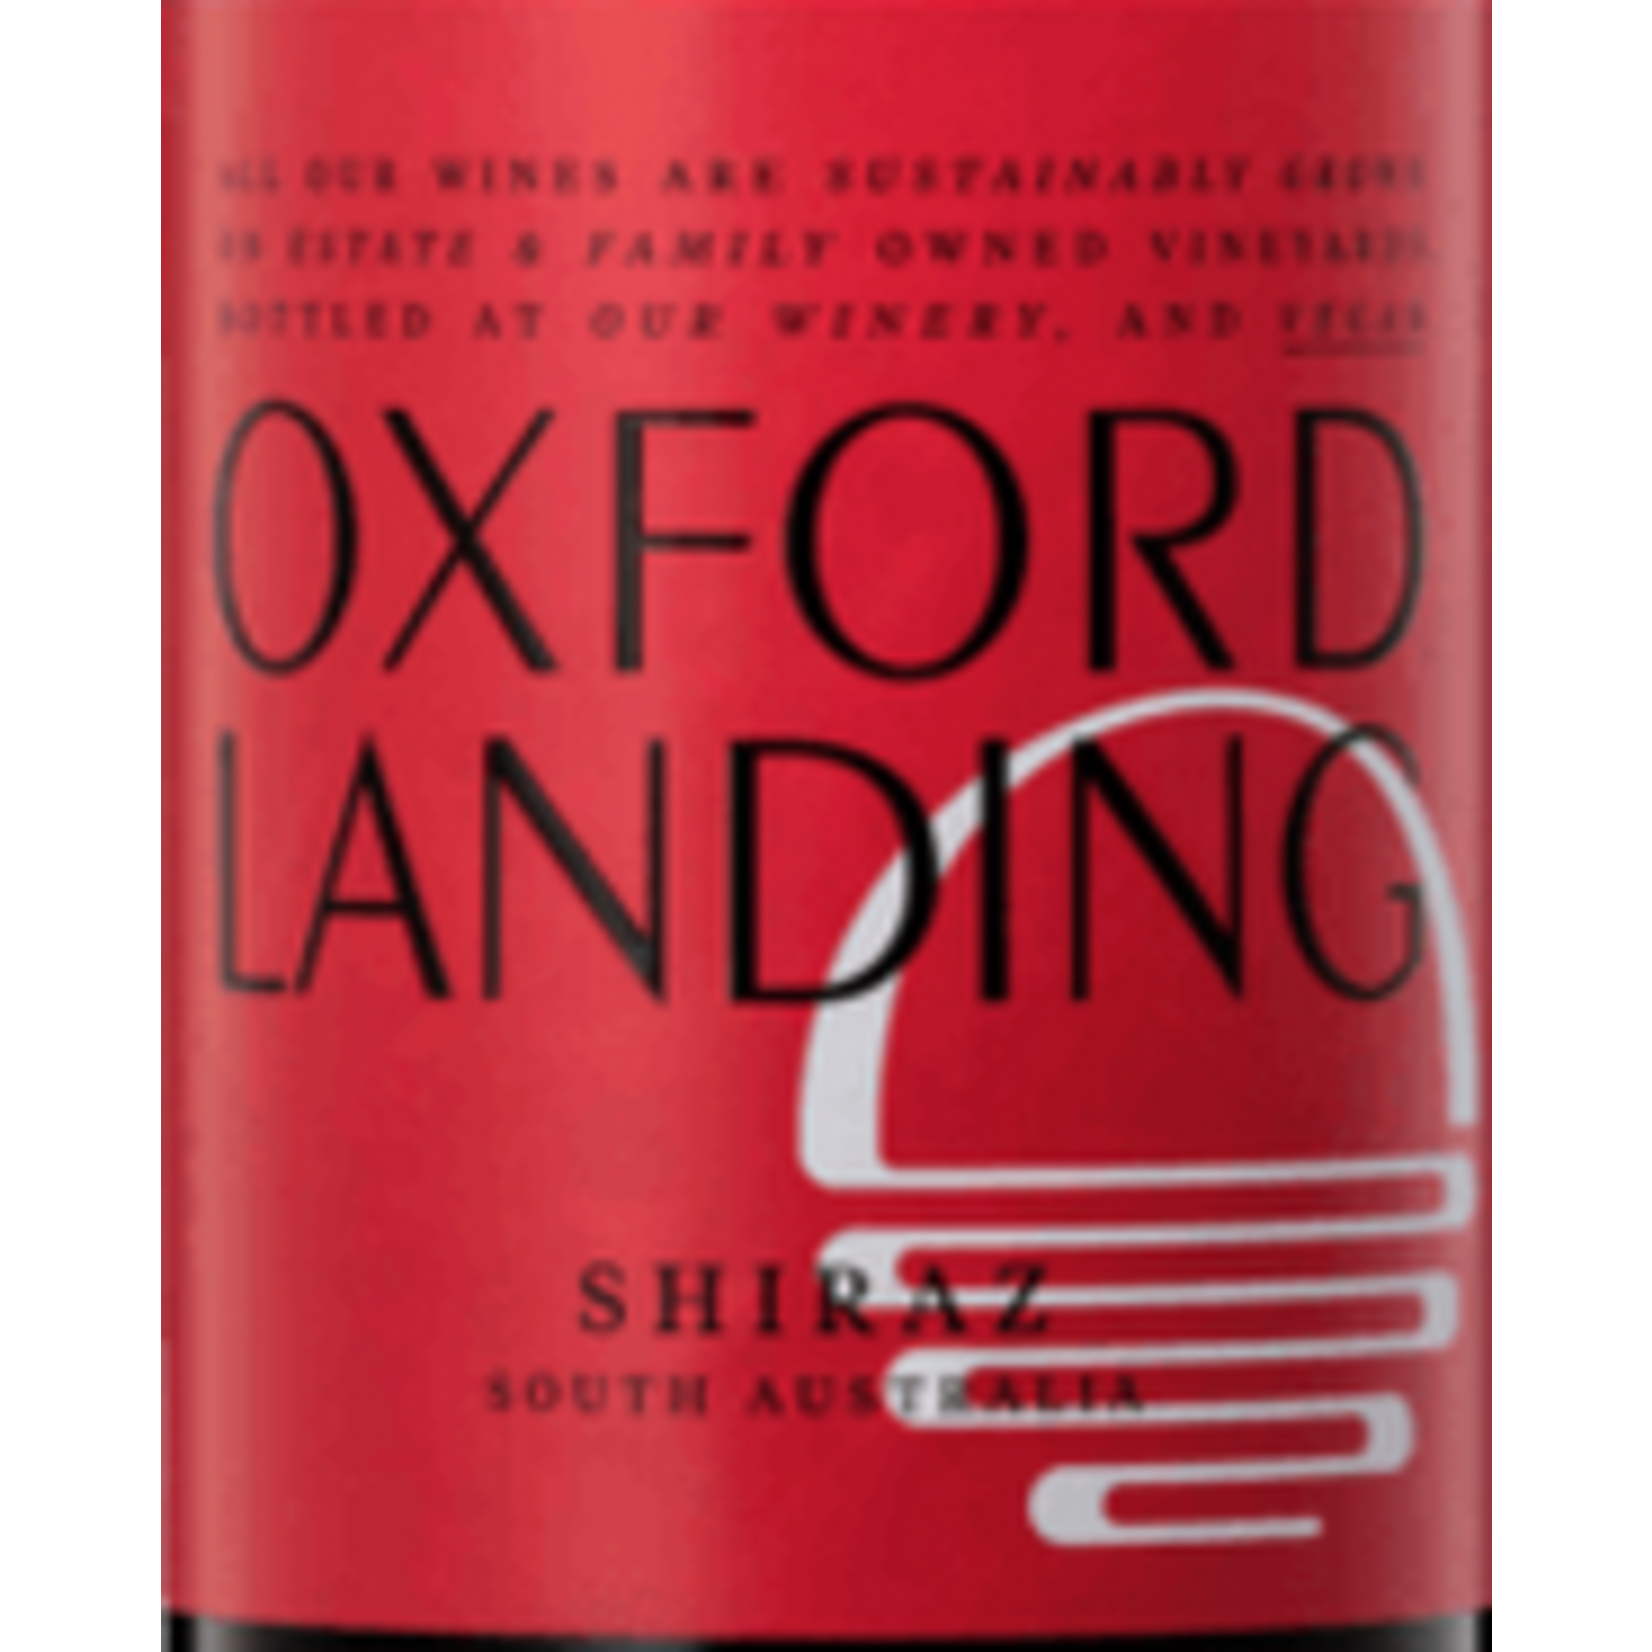 Oxford Landing Estate Oxford Landing Shiraz 2019  Australia